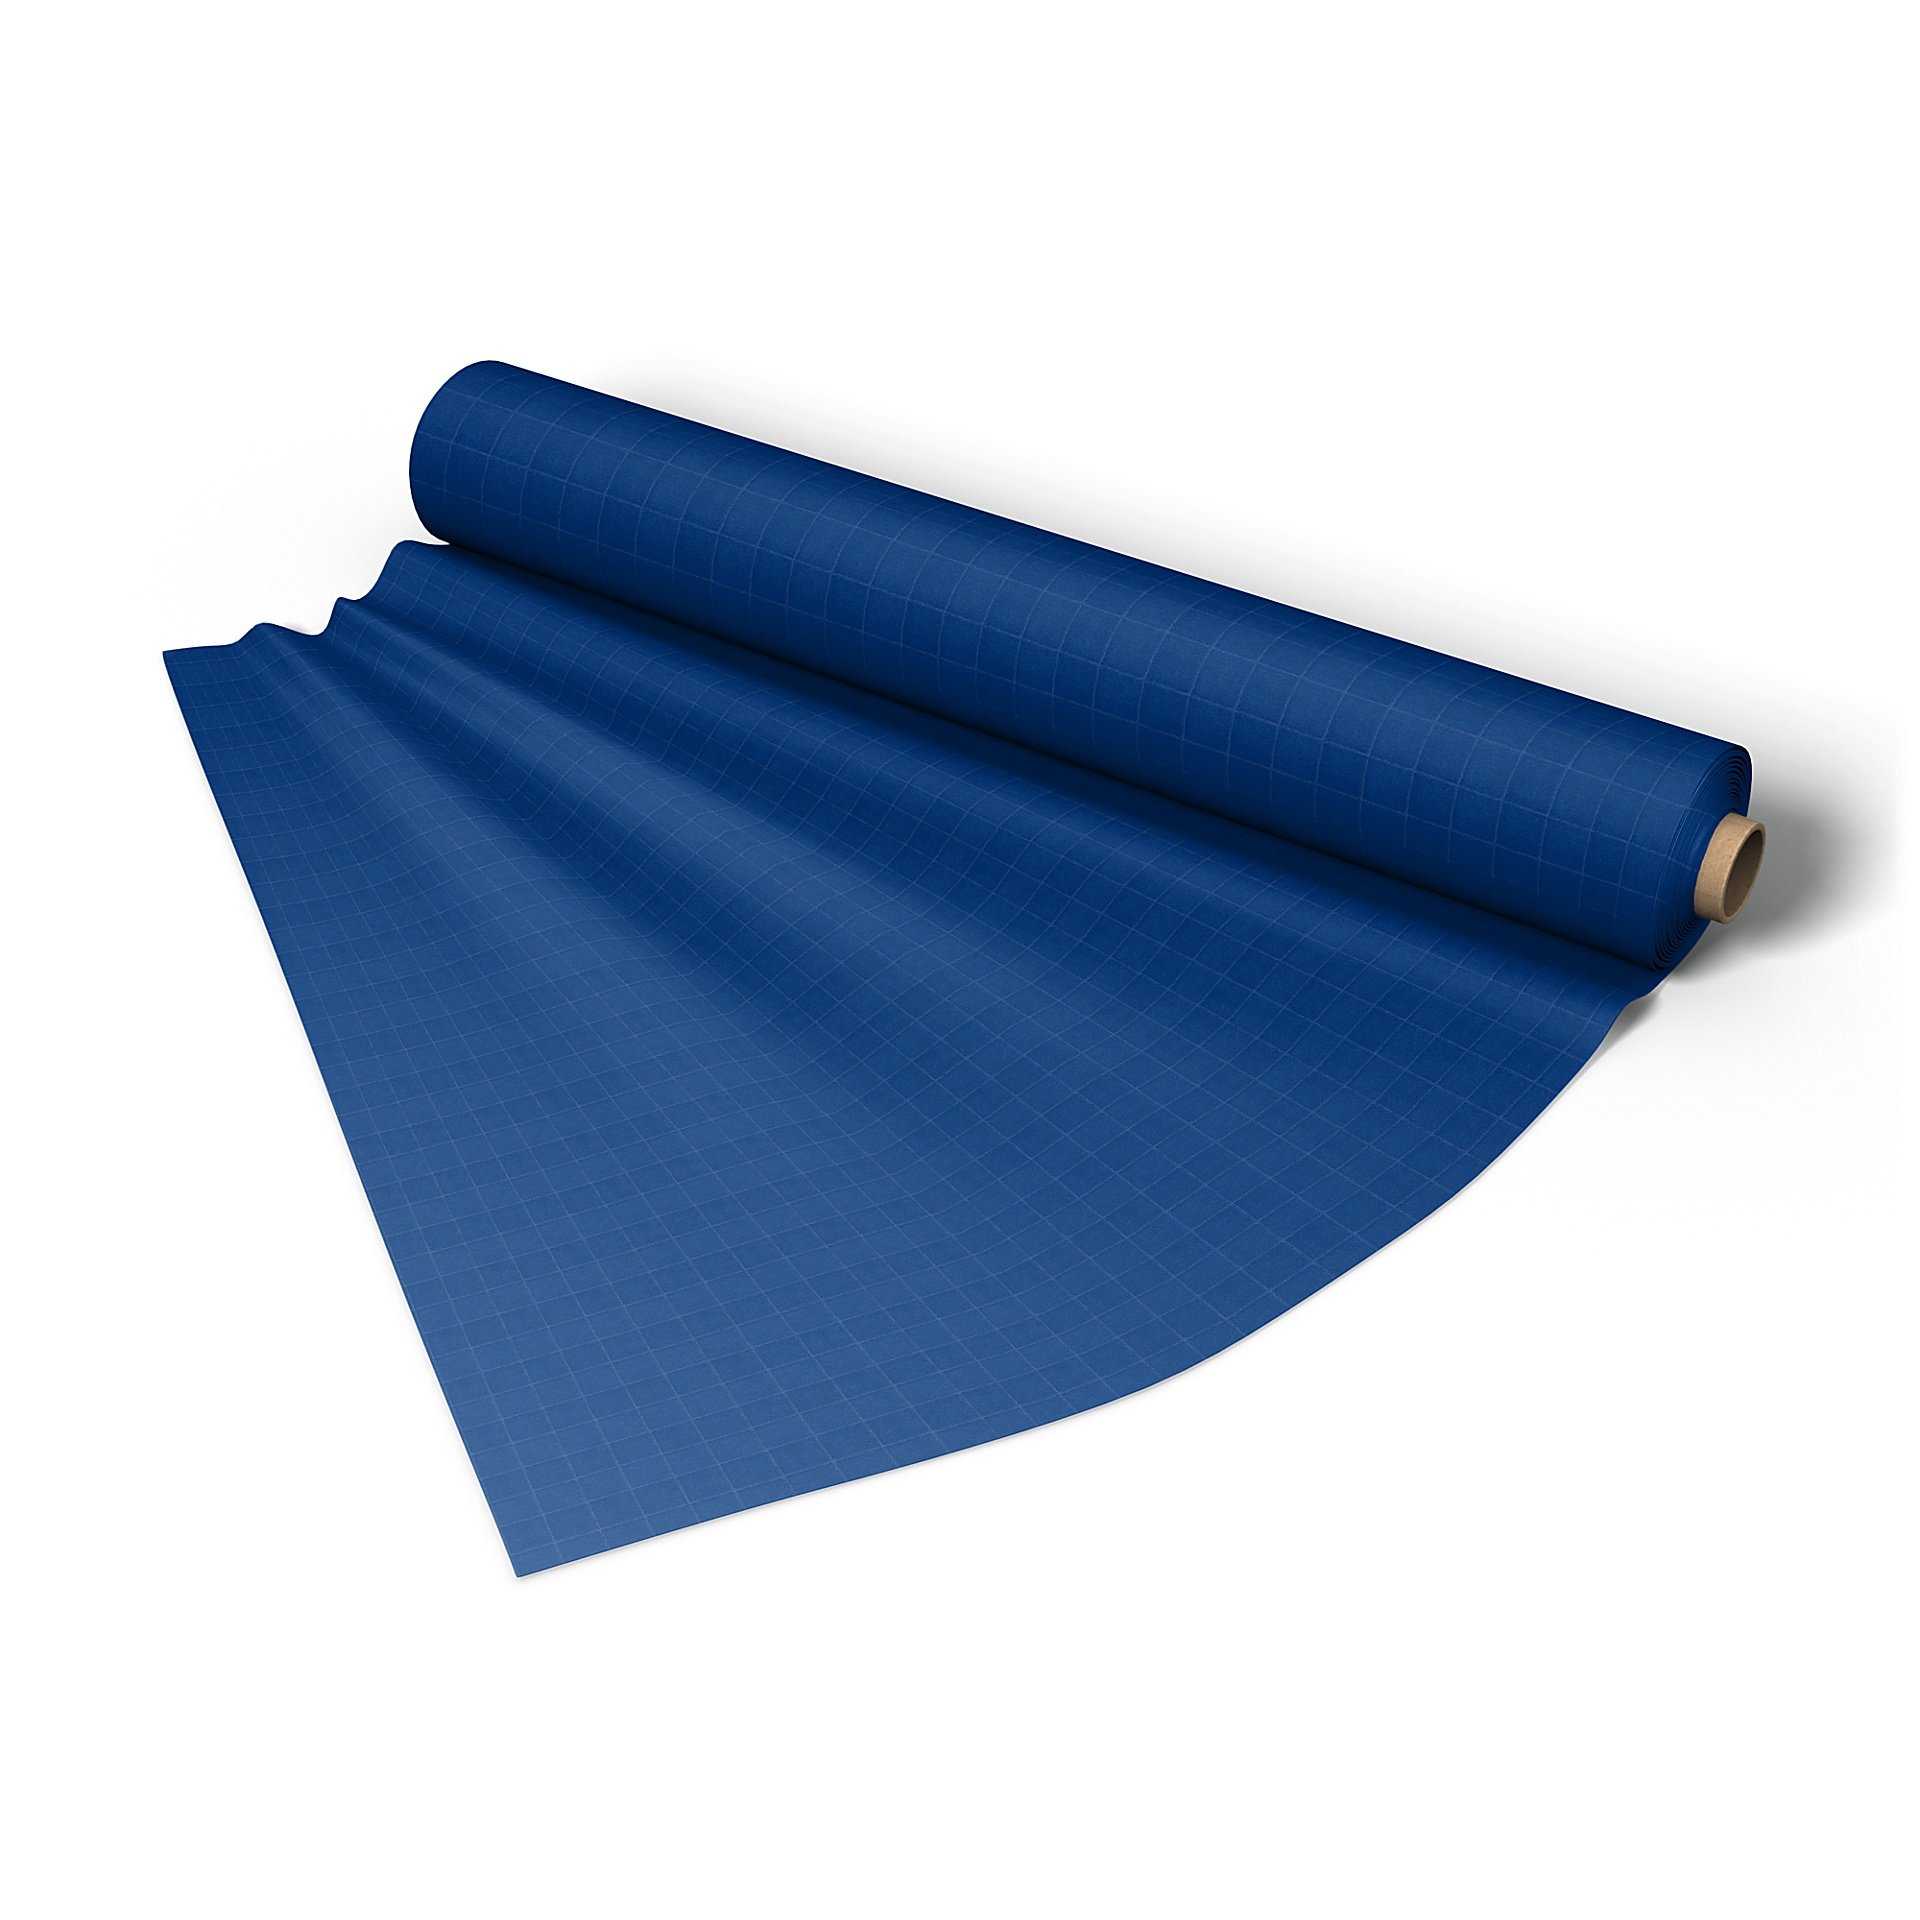 Fabric per metre, Lapis Blue, Velvet - Bemz